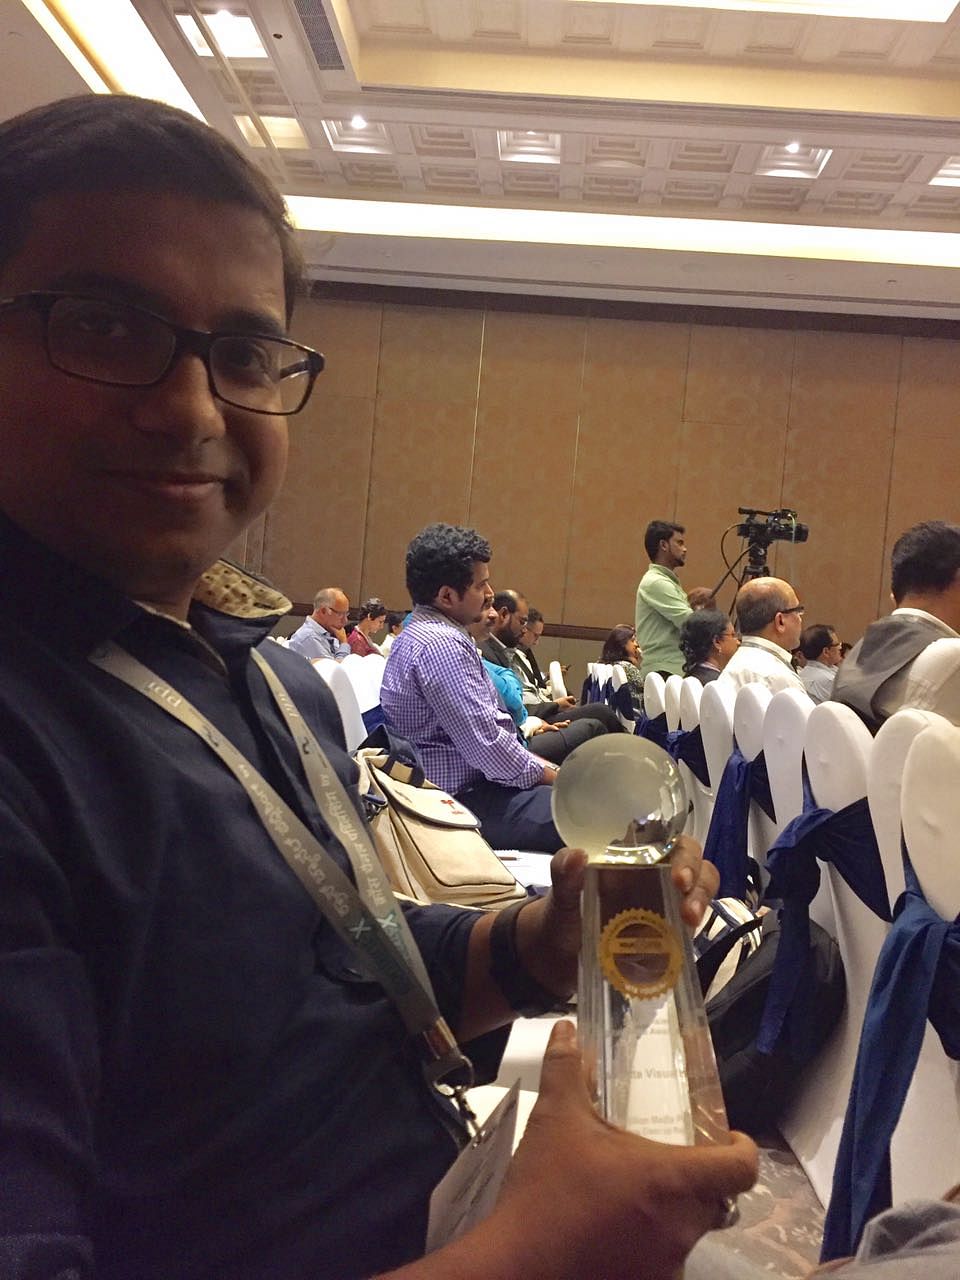 The Quint’s Tushar Banerjee at the South Asian Digital Media Awards 2017 in Chennai.